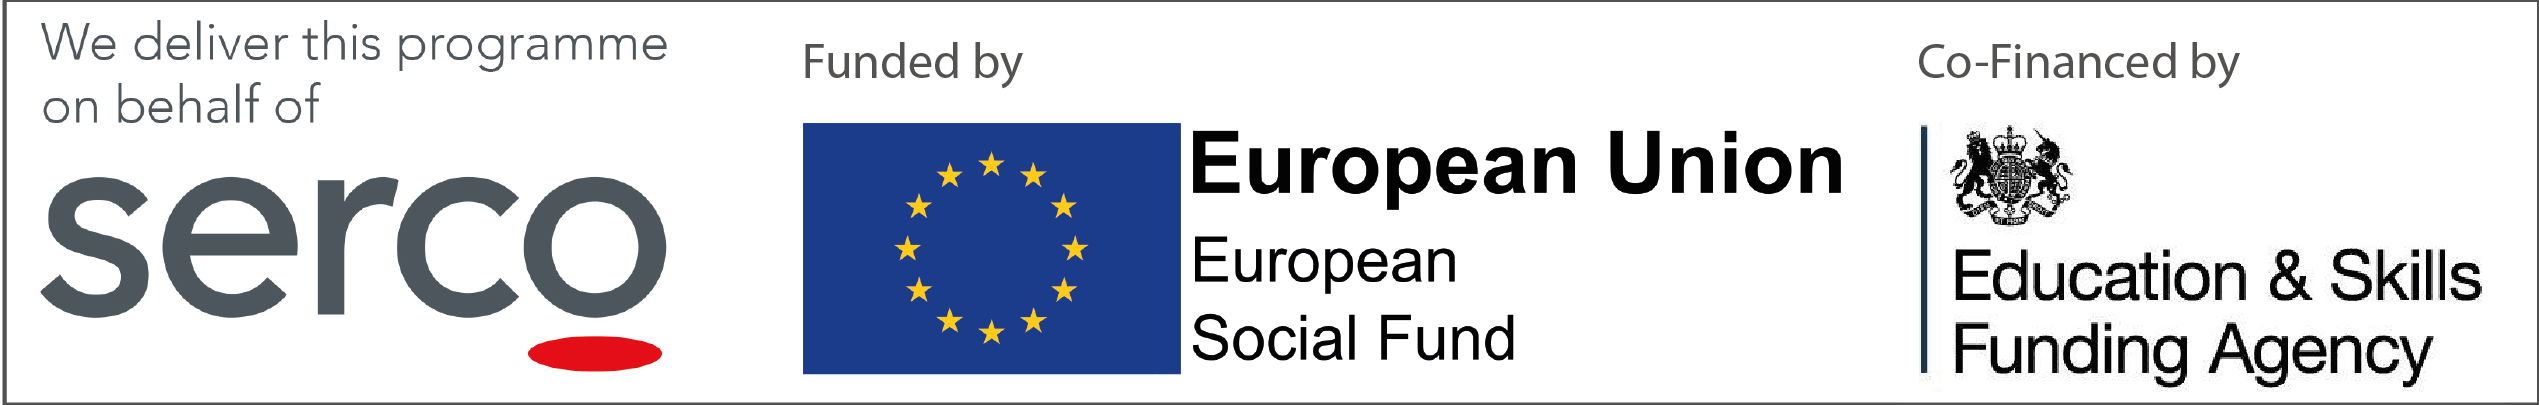 Image shows logos of SERCO, European Union ESF and Education & Skills Funding Agency ESFA